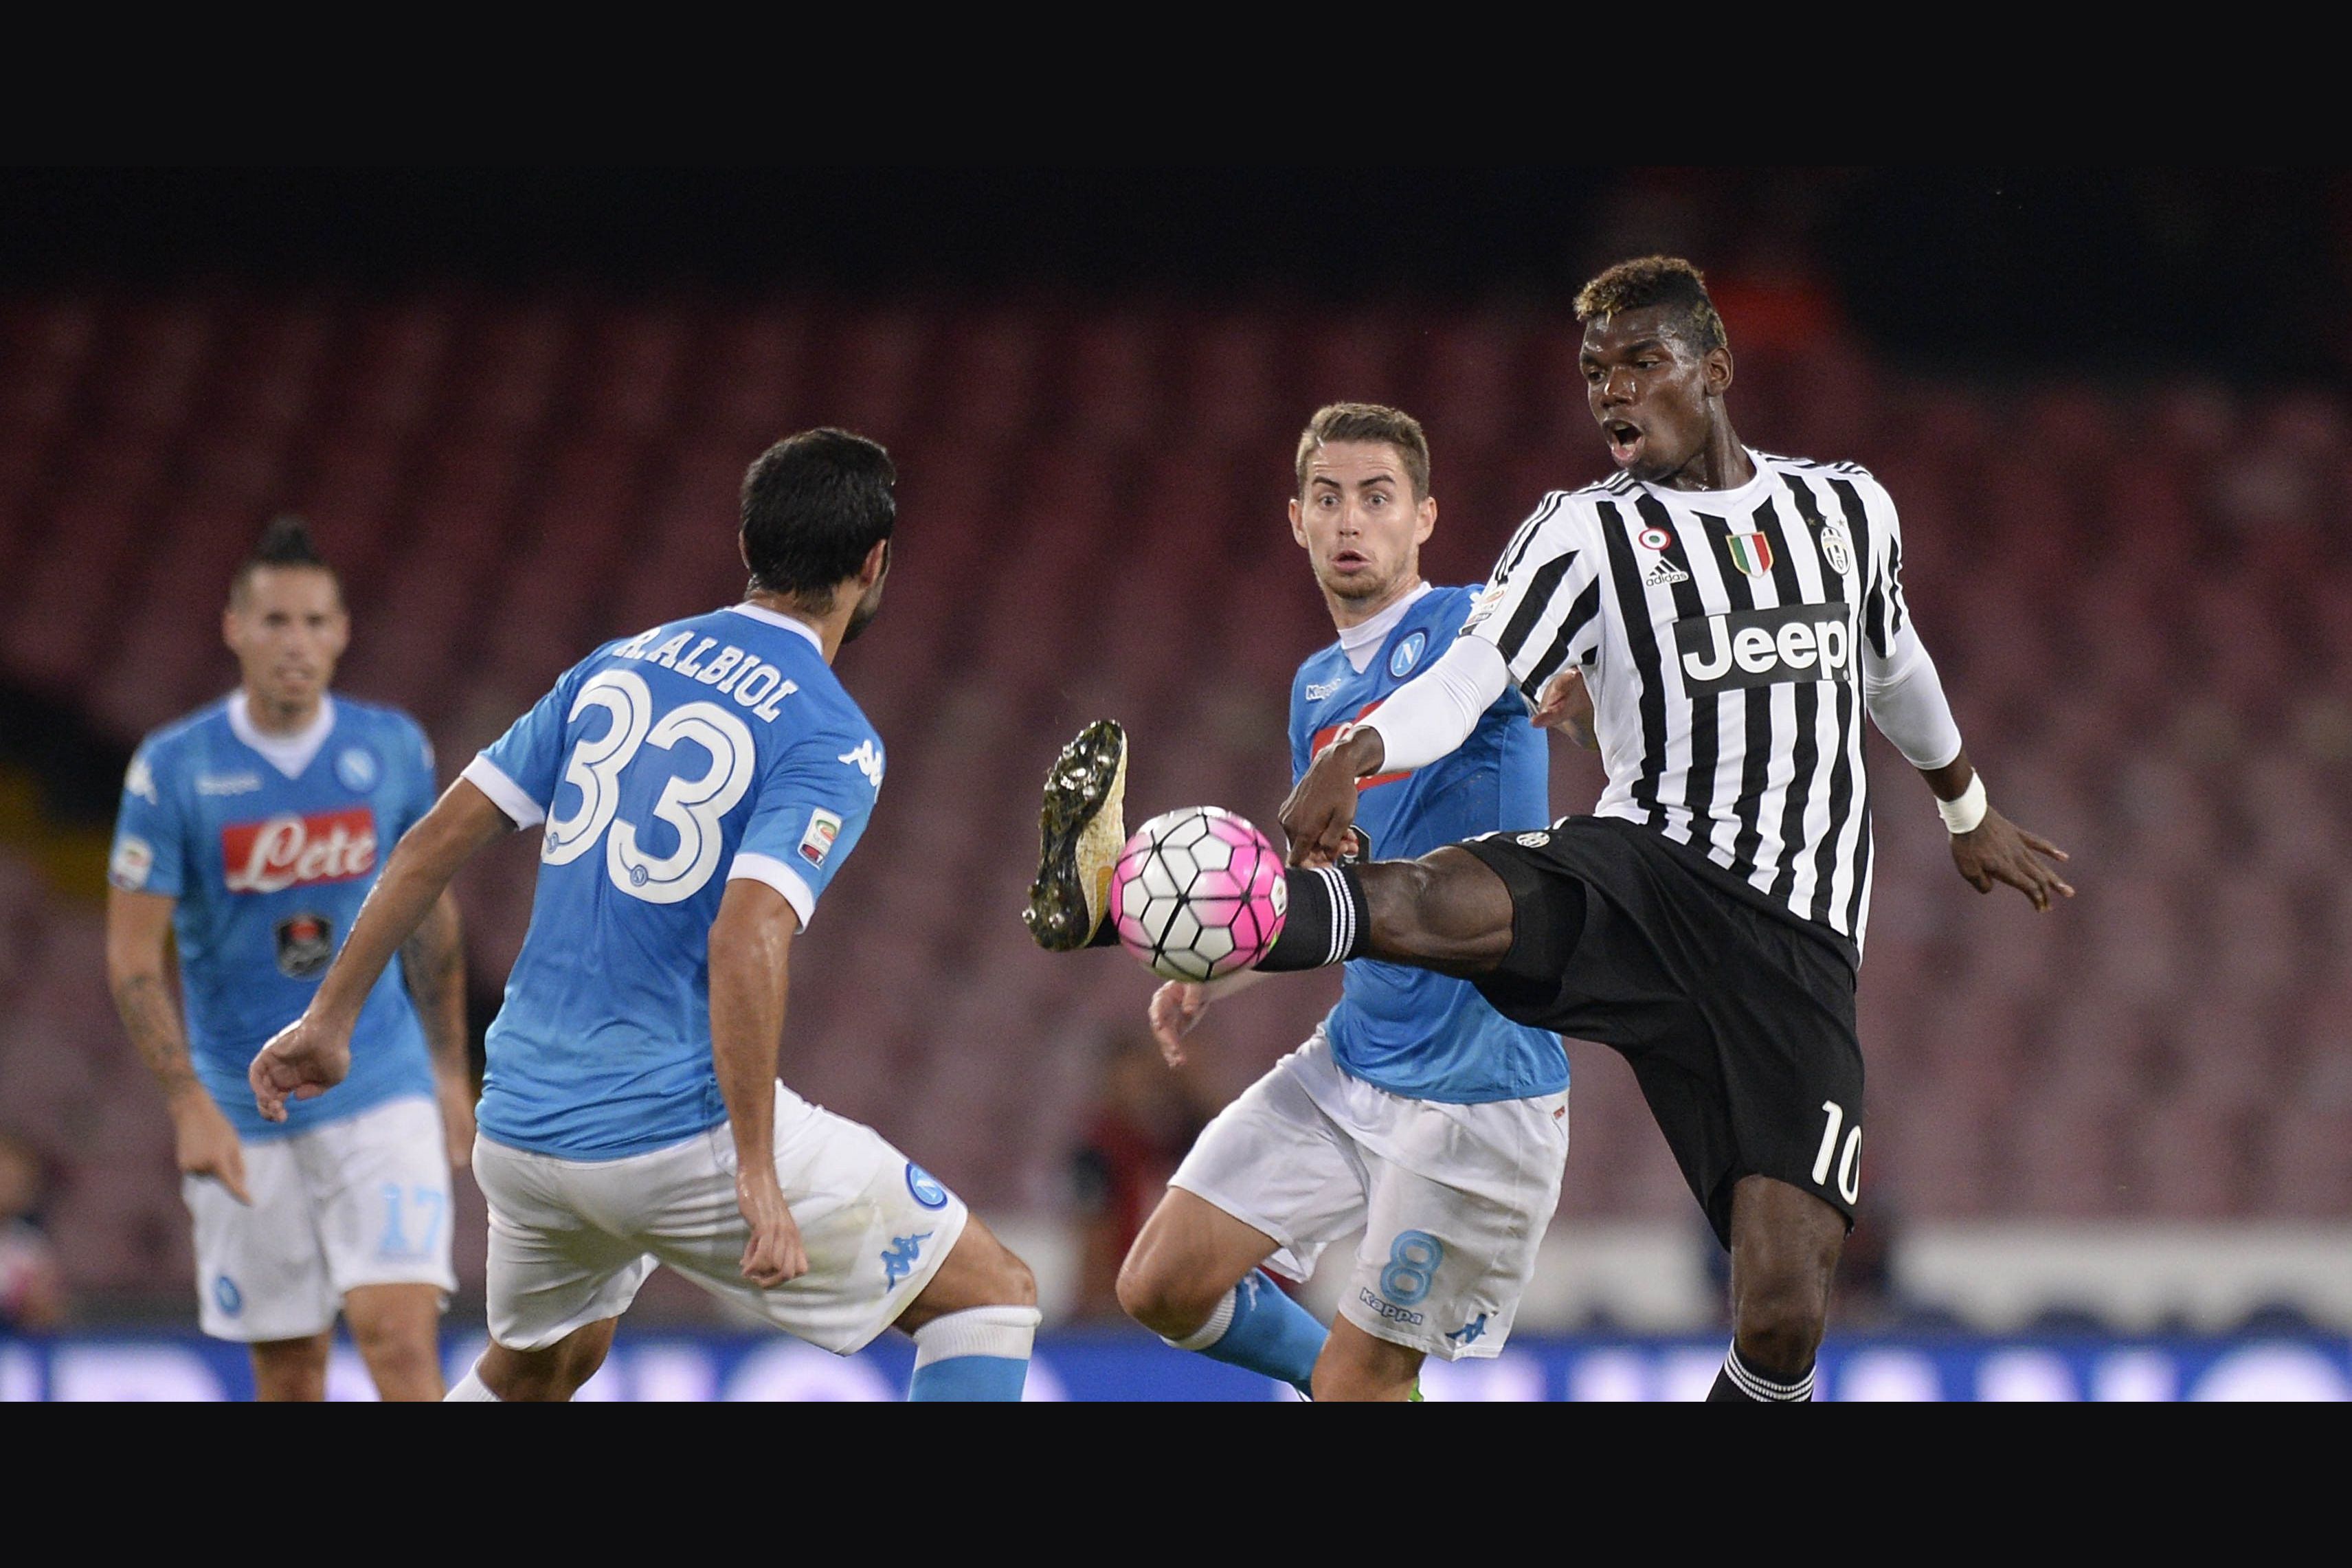 Juventus 2015/16. Juve Napoli Ciccio Zebra. Ювентус - Наполи крутая афиша превью. Juve Napoli Ciccio Zebra scopano.